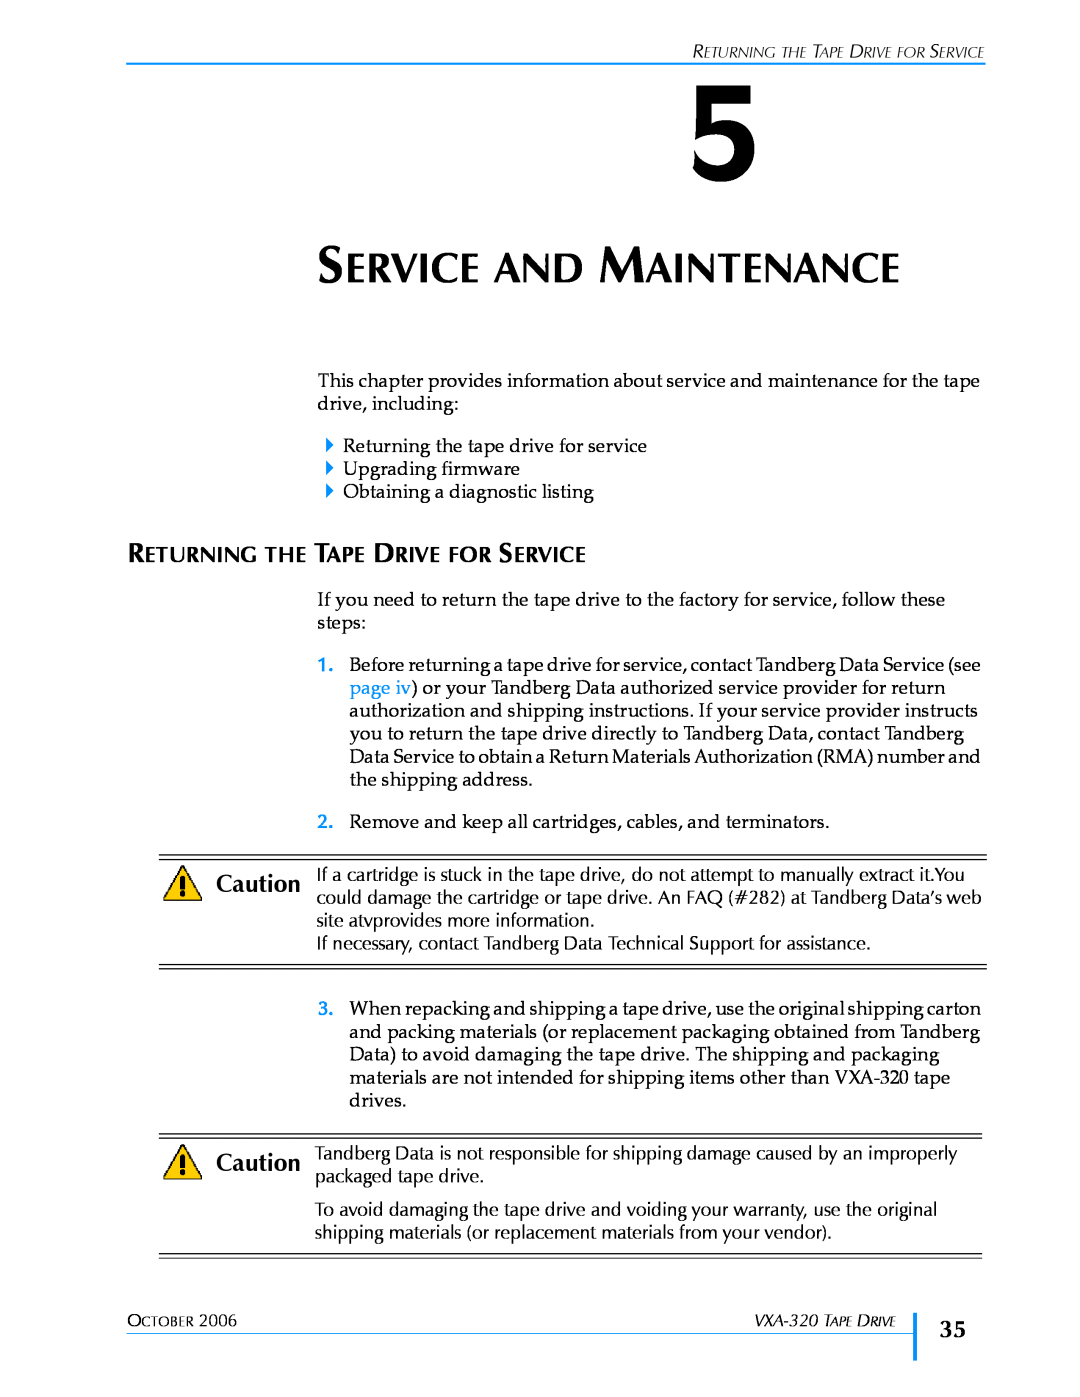 Tandberg Data VXA-320 (VXA-3) manual Service And Maintenance, Returning The Tape Drive For Service 